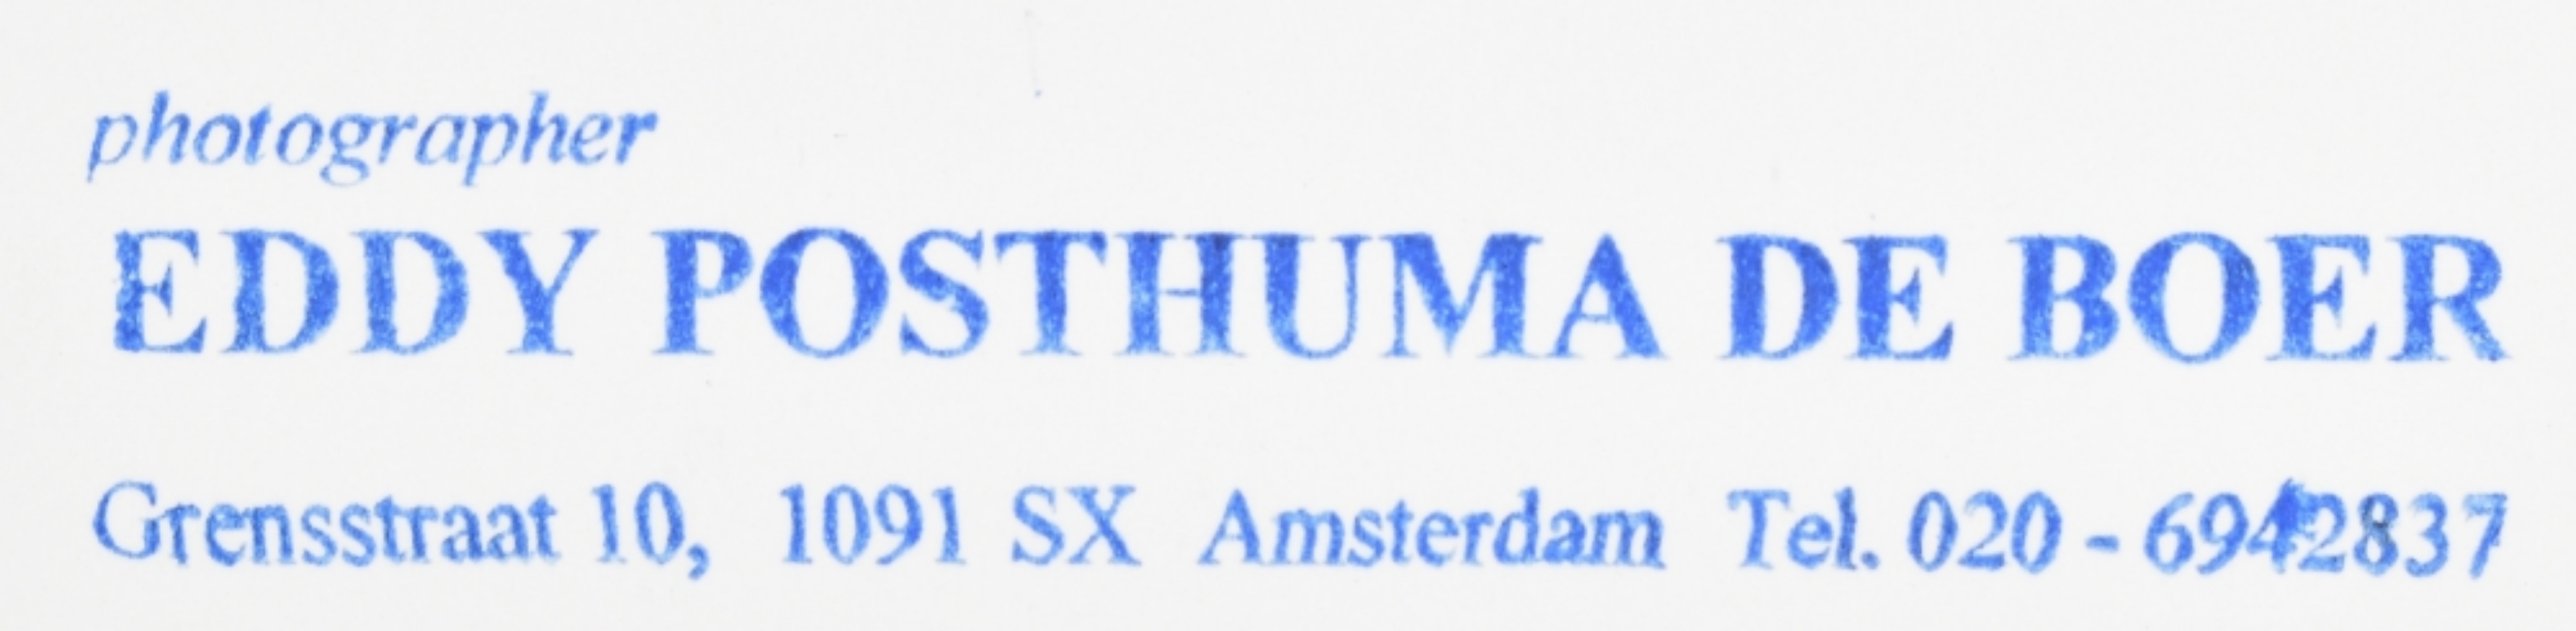 Eddy Posthuma de Boer (1931-2021). De zoete inval van Ome Henk - Image 2 of 5